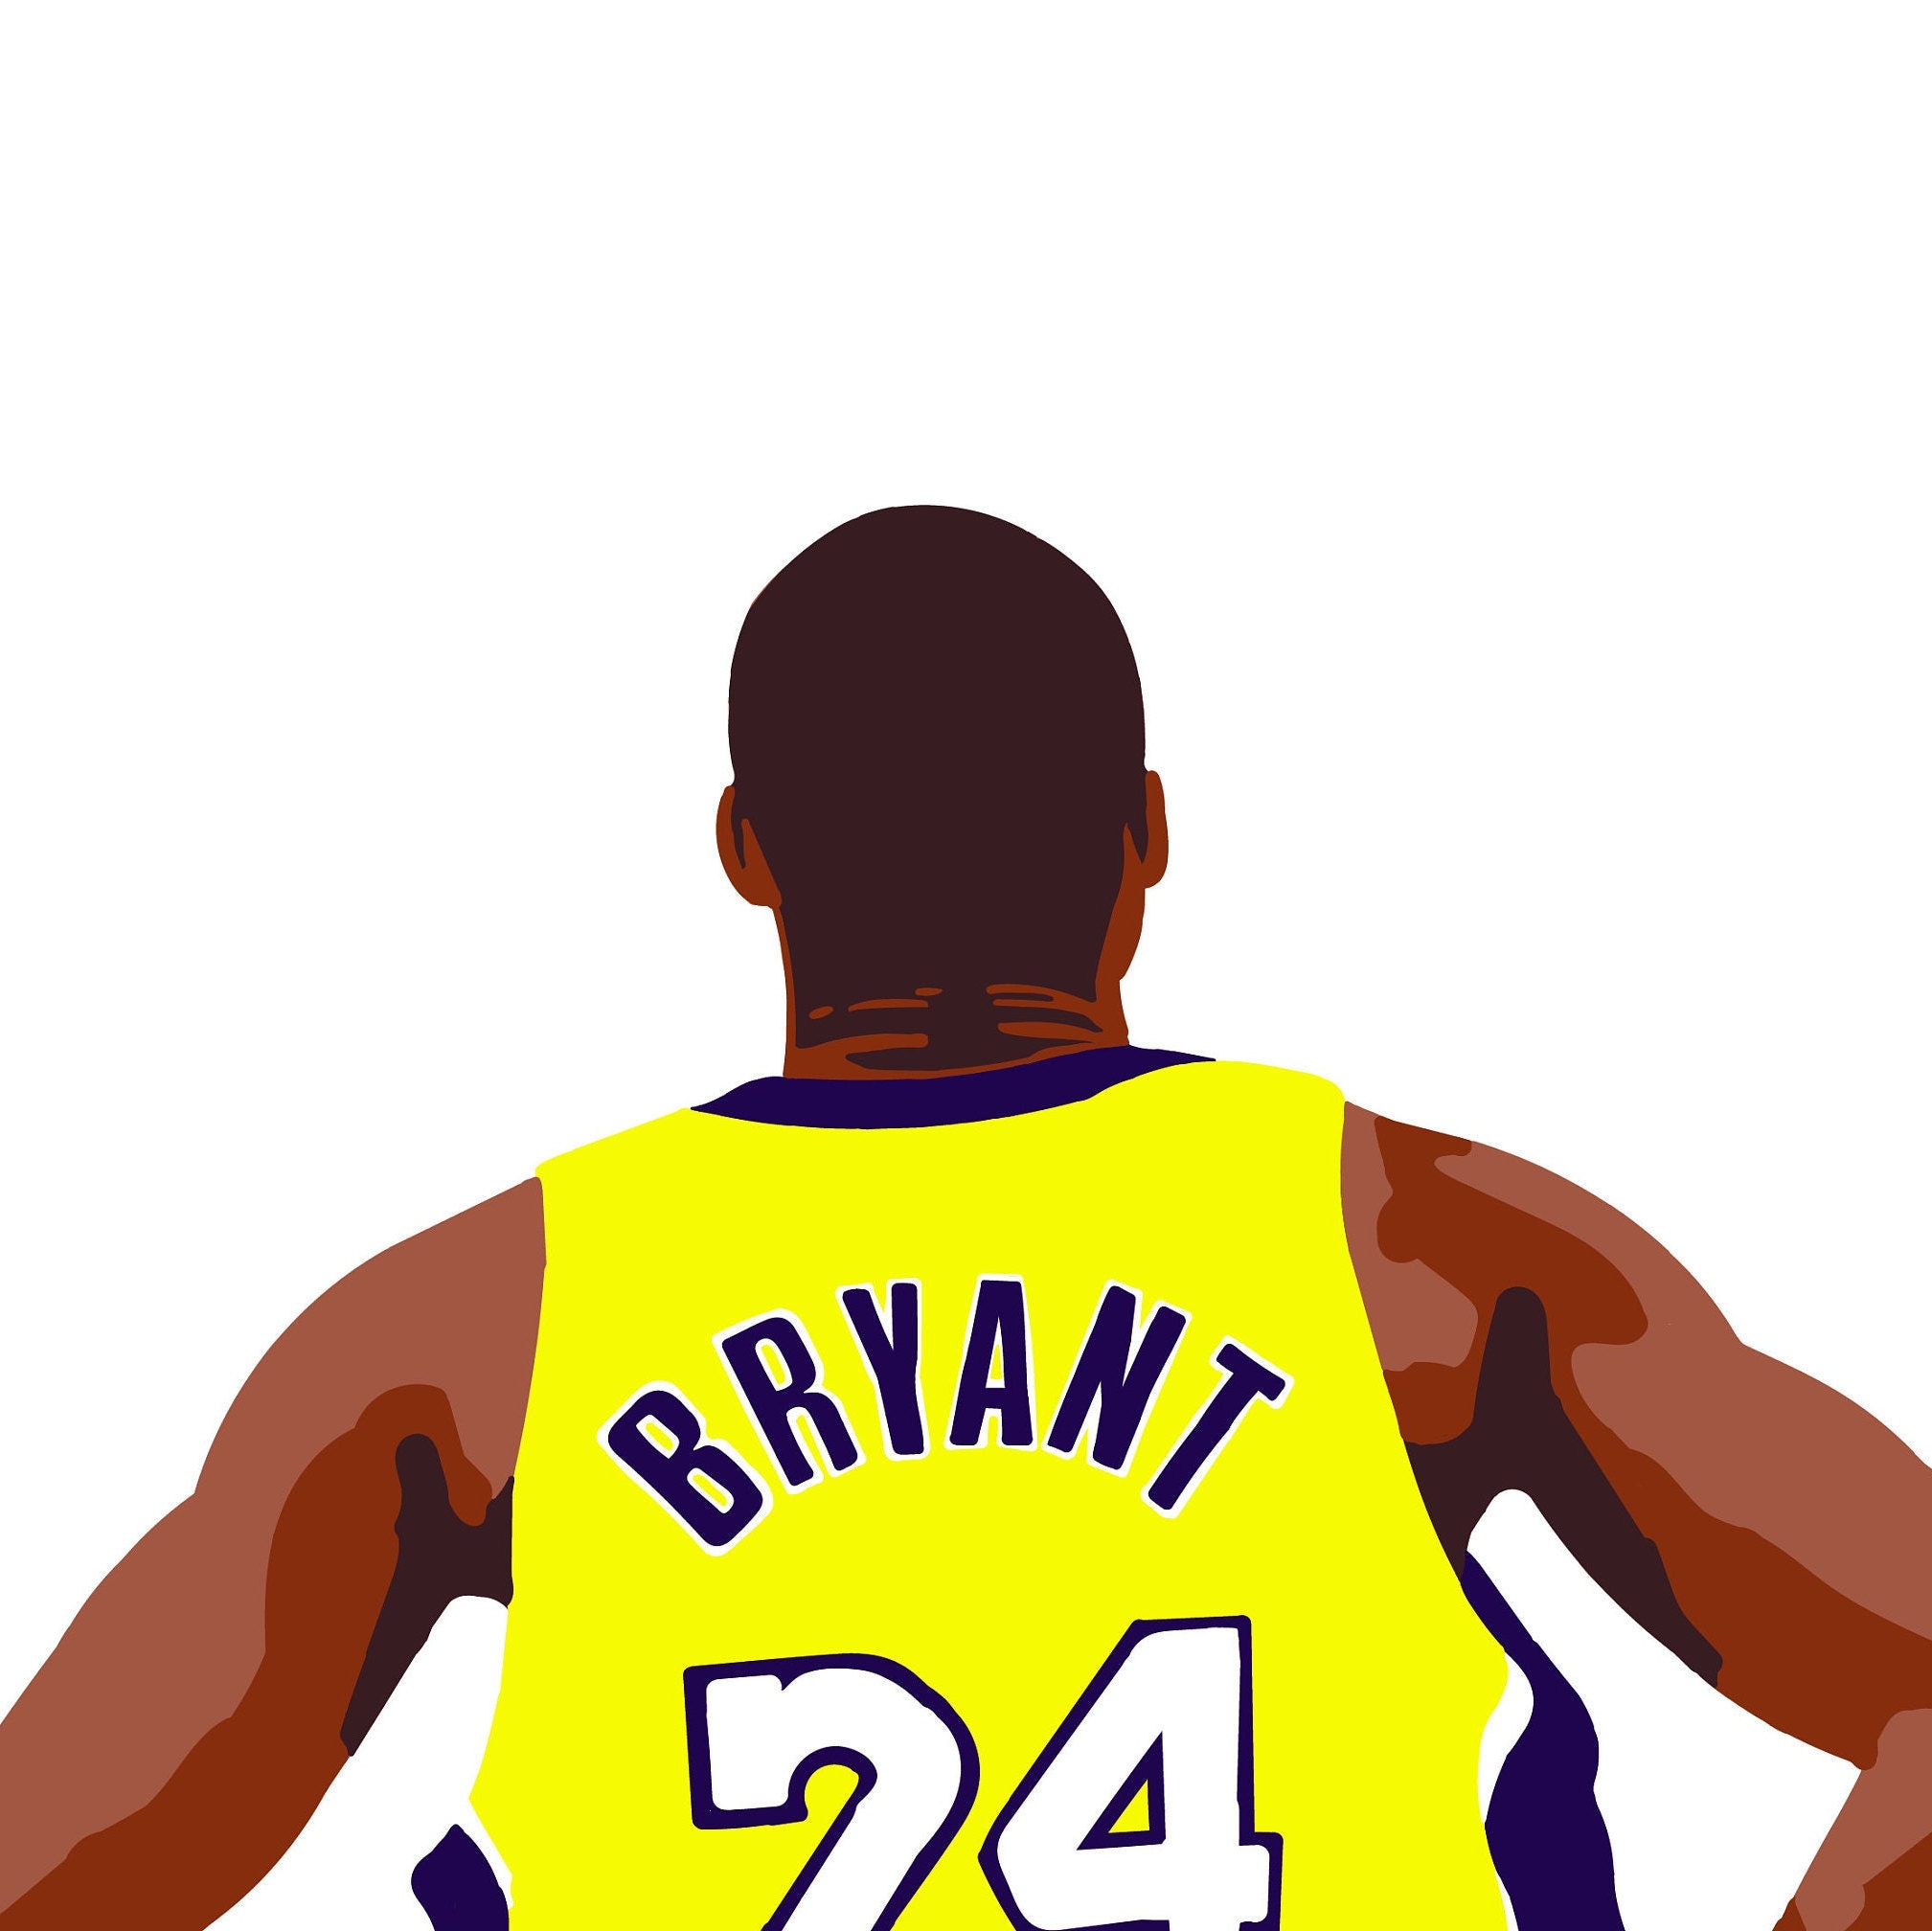 Kobe Bryant DIY Stencil Art 